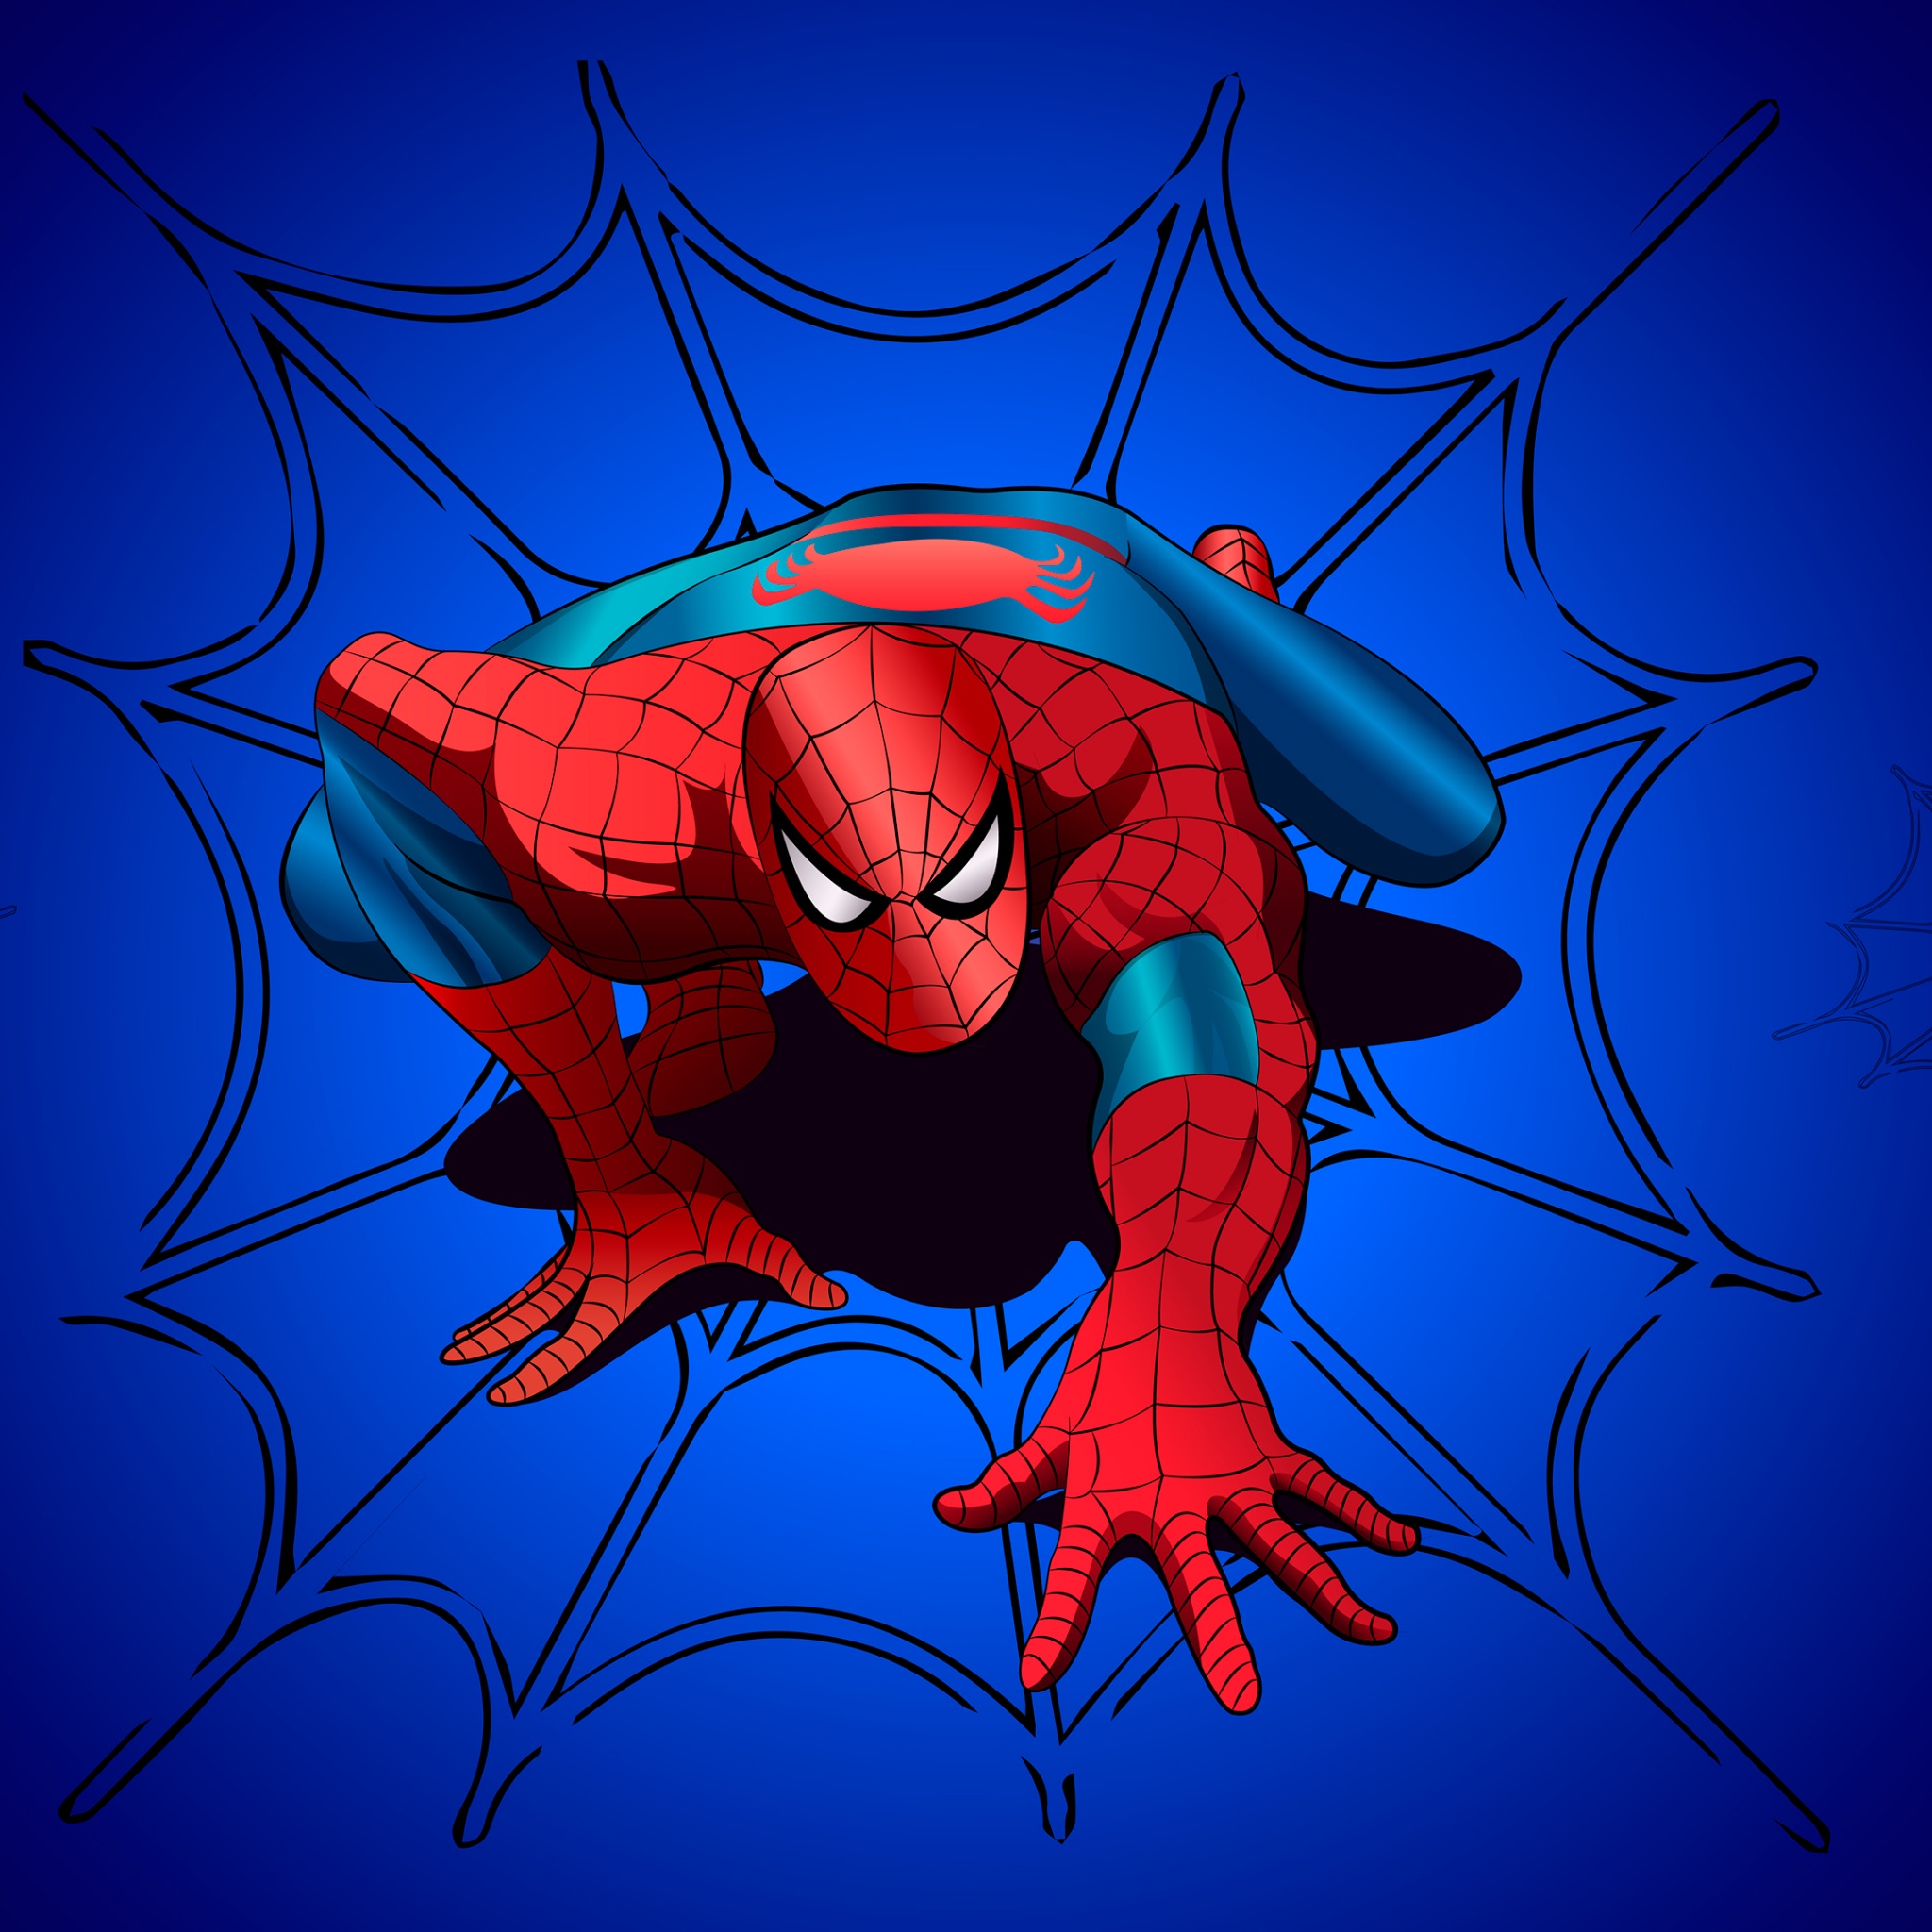 The Amazing Spider Man 2014 iPad Air Wallpaper Download  iPhone Wallpapers  iPad wallpapers Onestop Do  Amazing spiderman Spiderman wallpaper  Spiderman suits